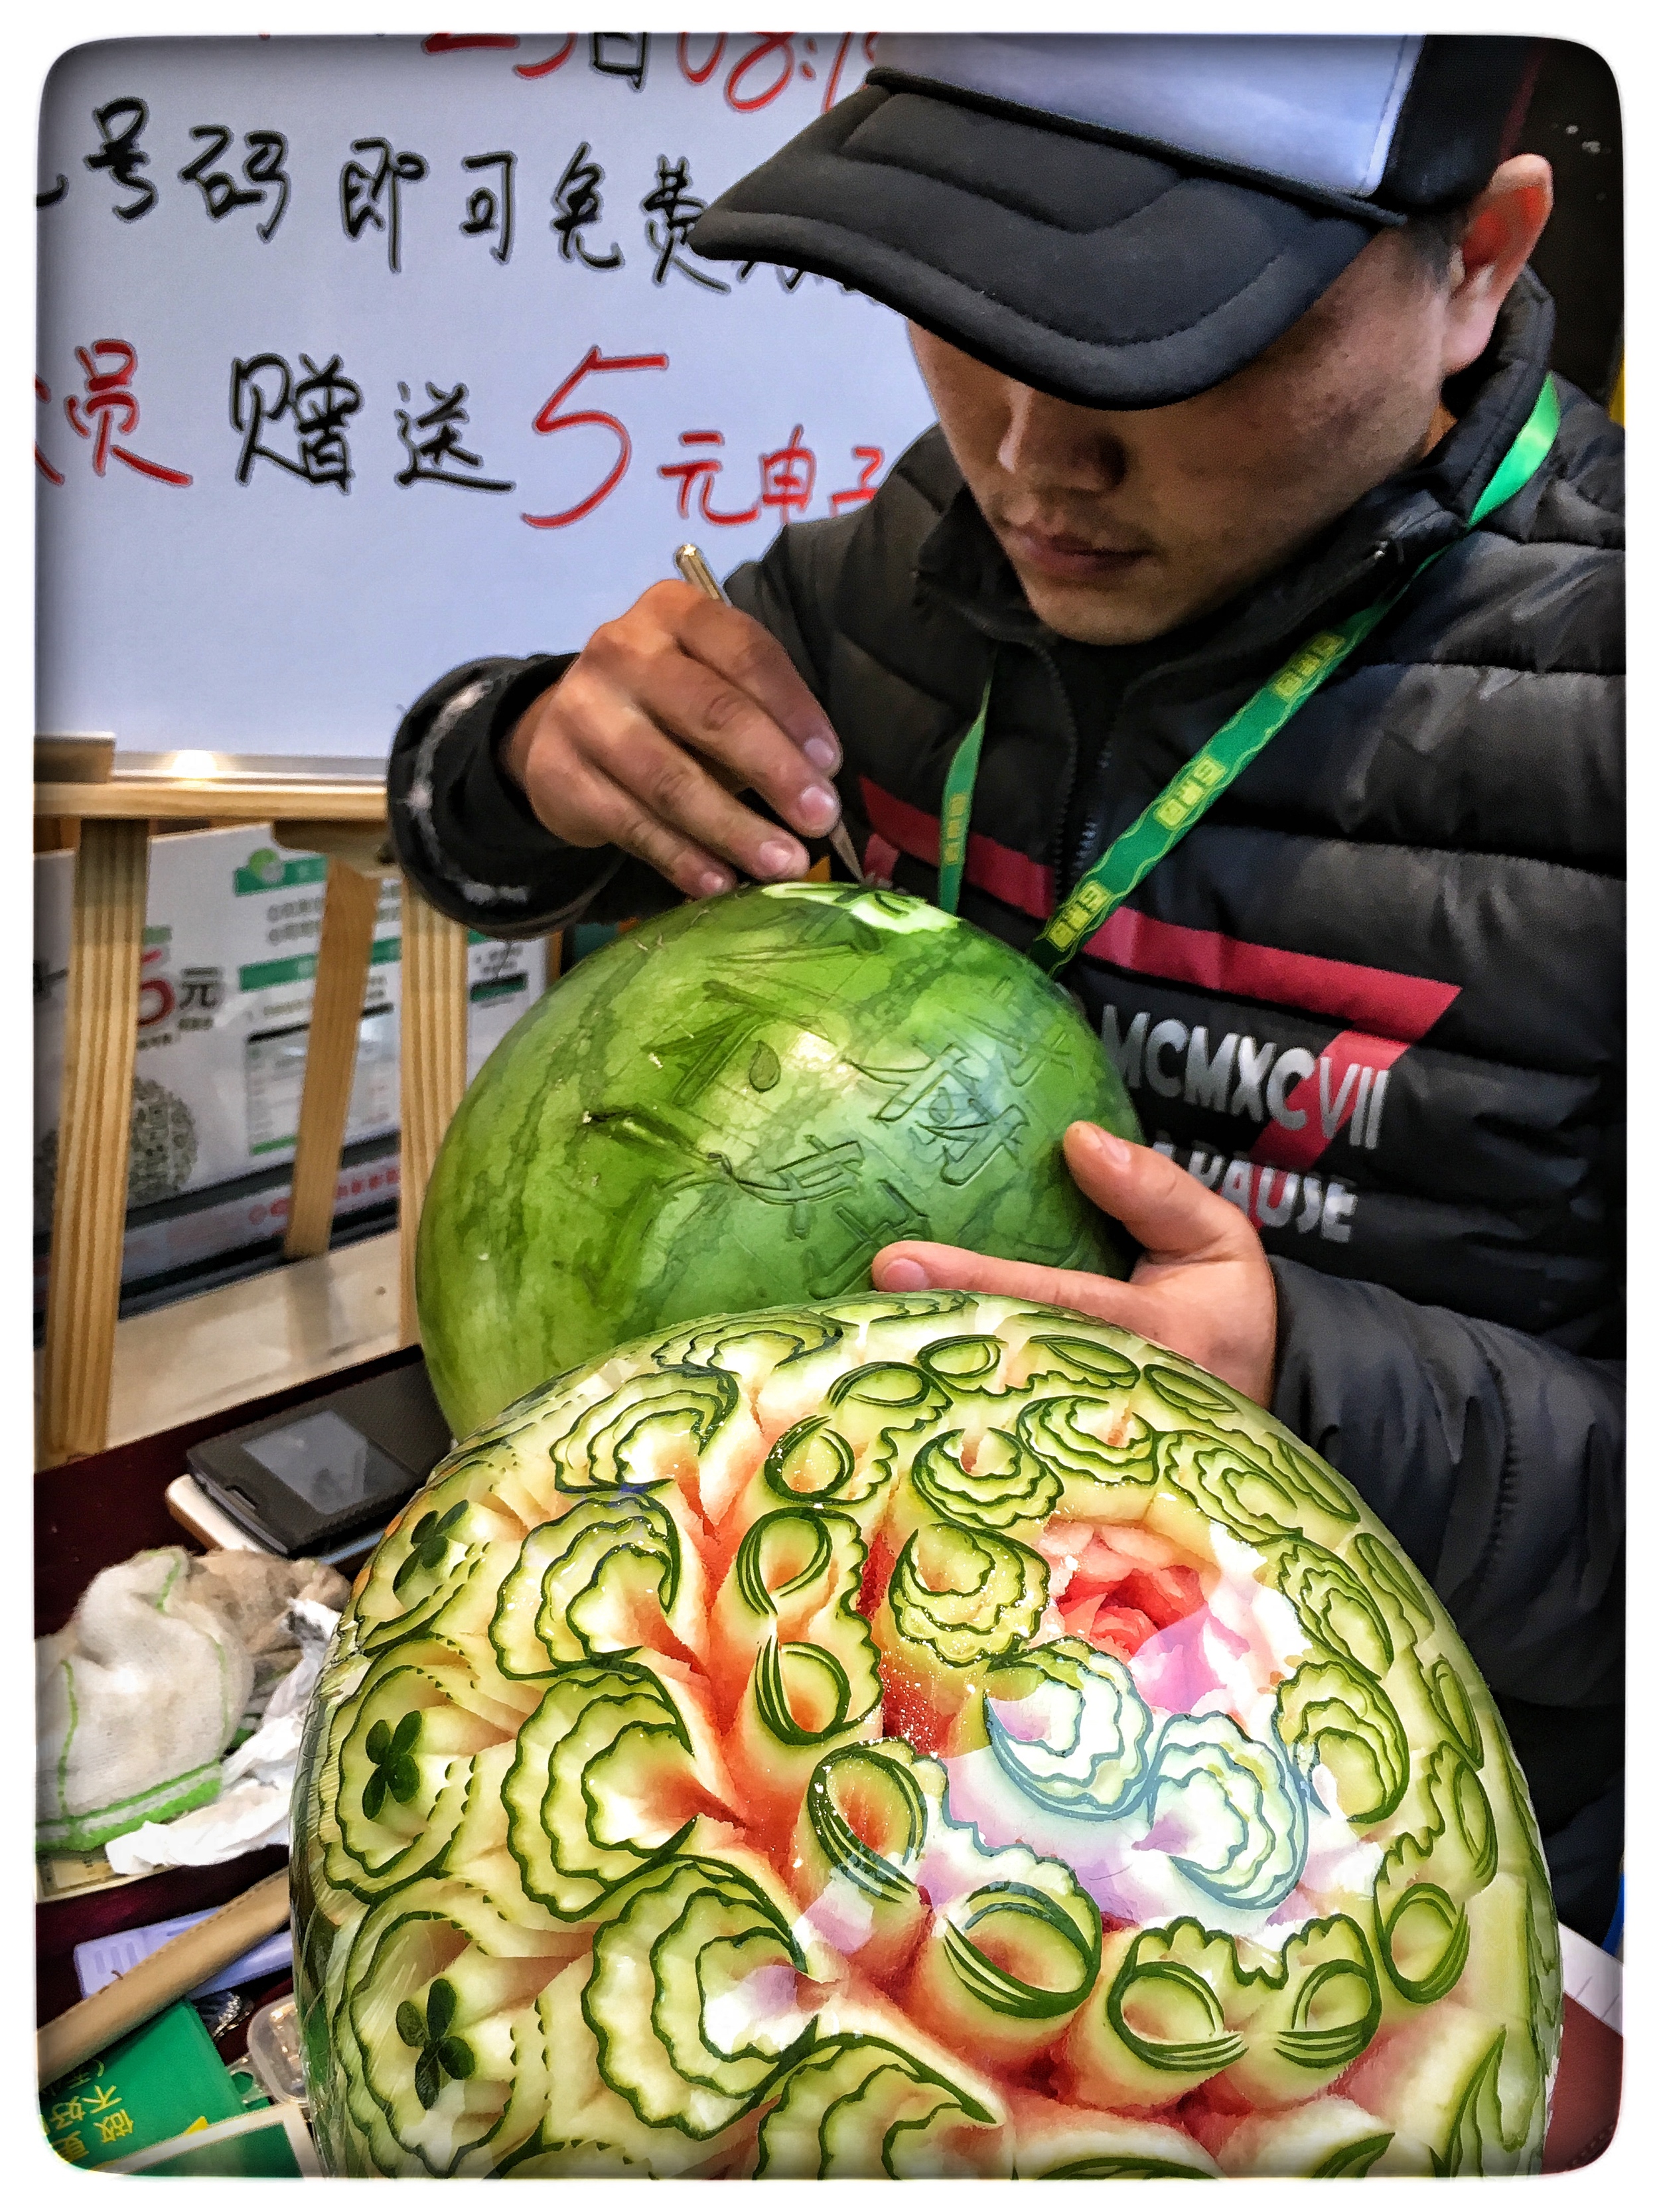  Watermelon carver, Wuhan 